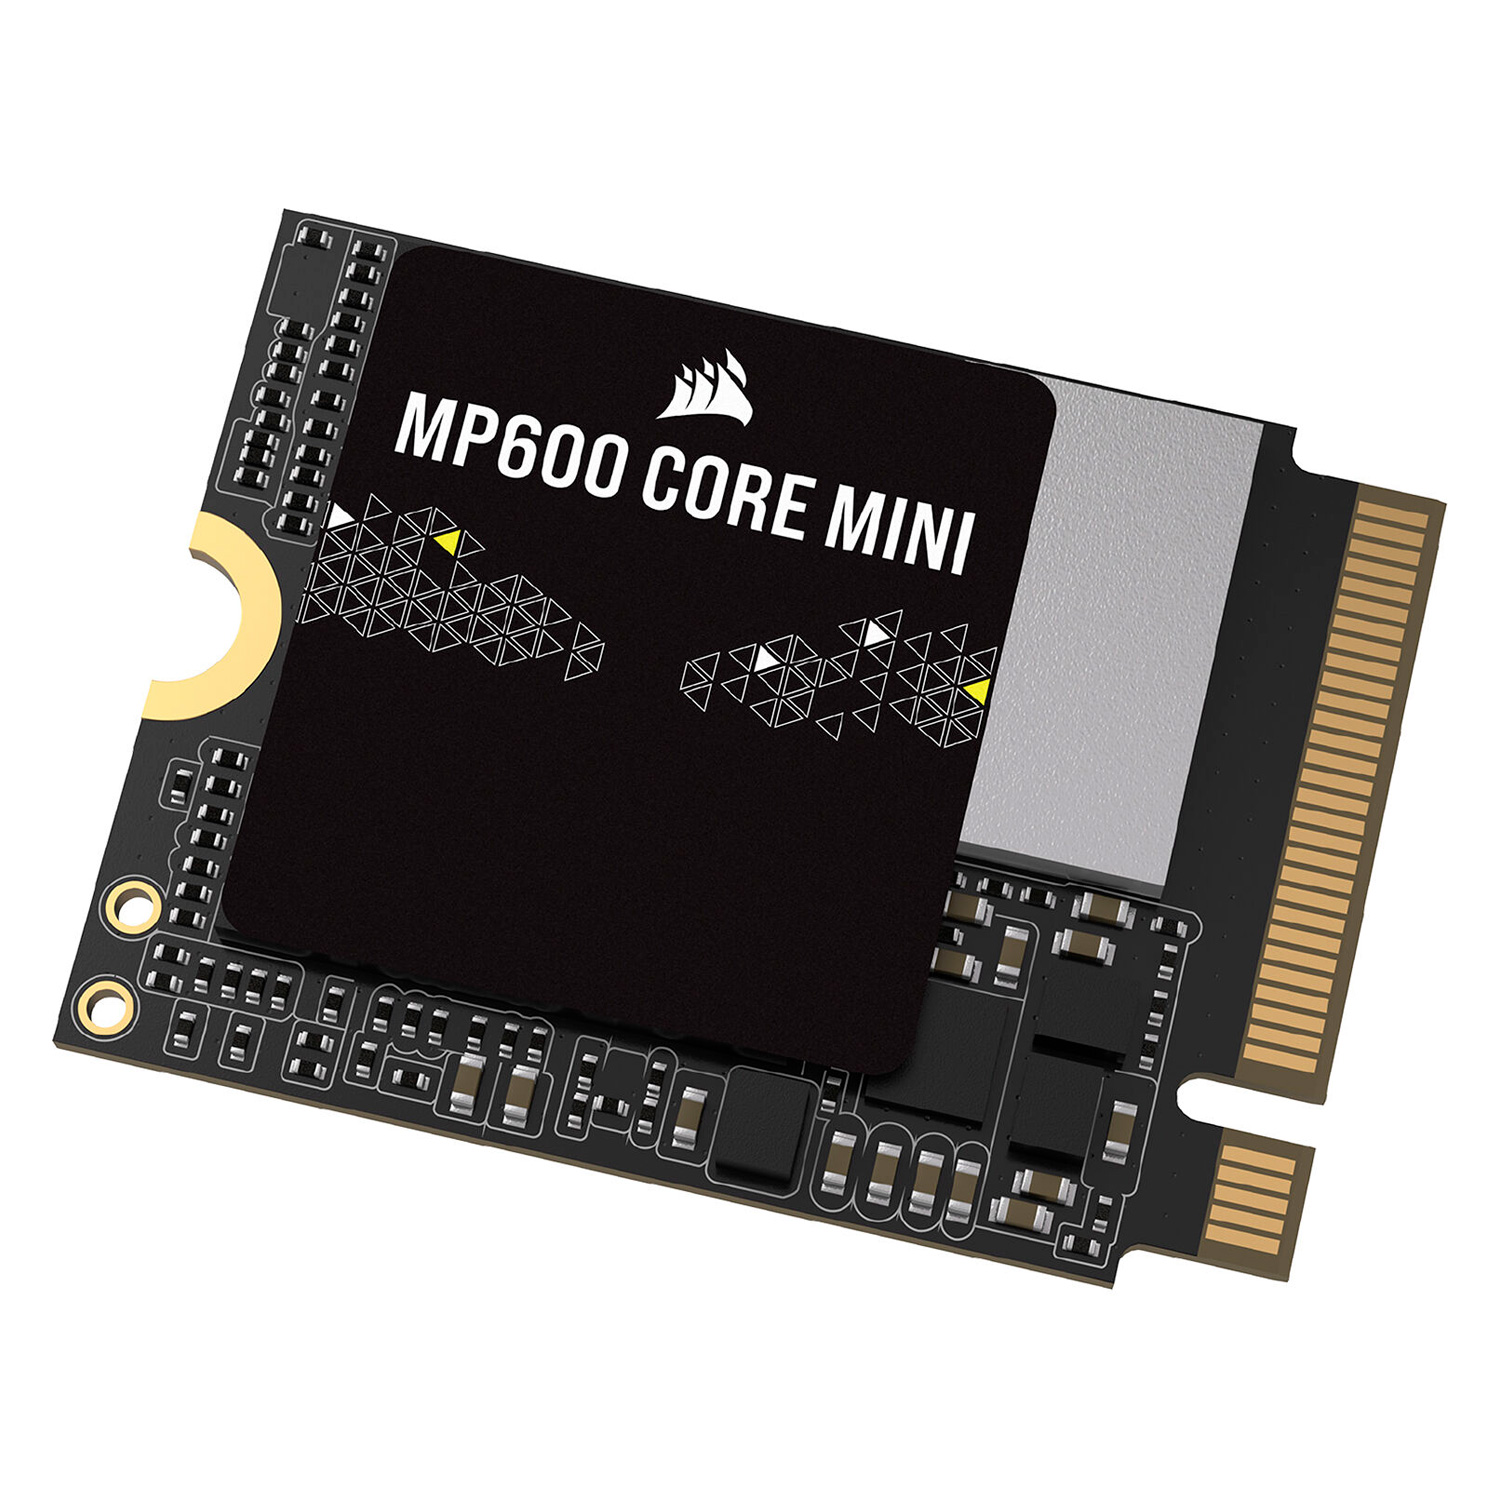 SSD M.2 Corsair MP600 Core Mini 1TB NVMe PCIe Gen4 - CSSD-F1000GBMP600CMN